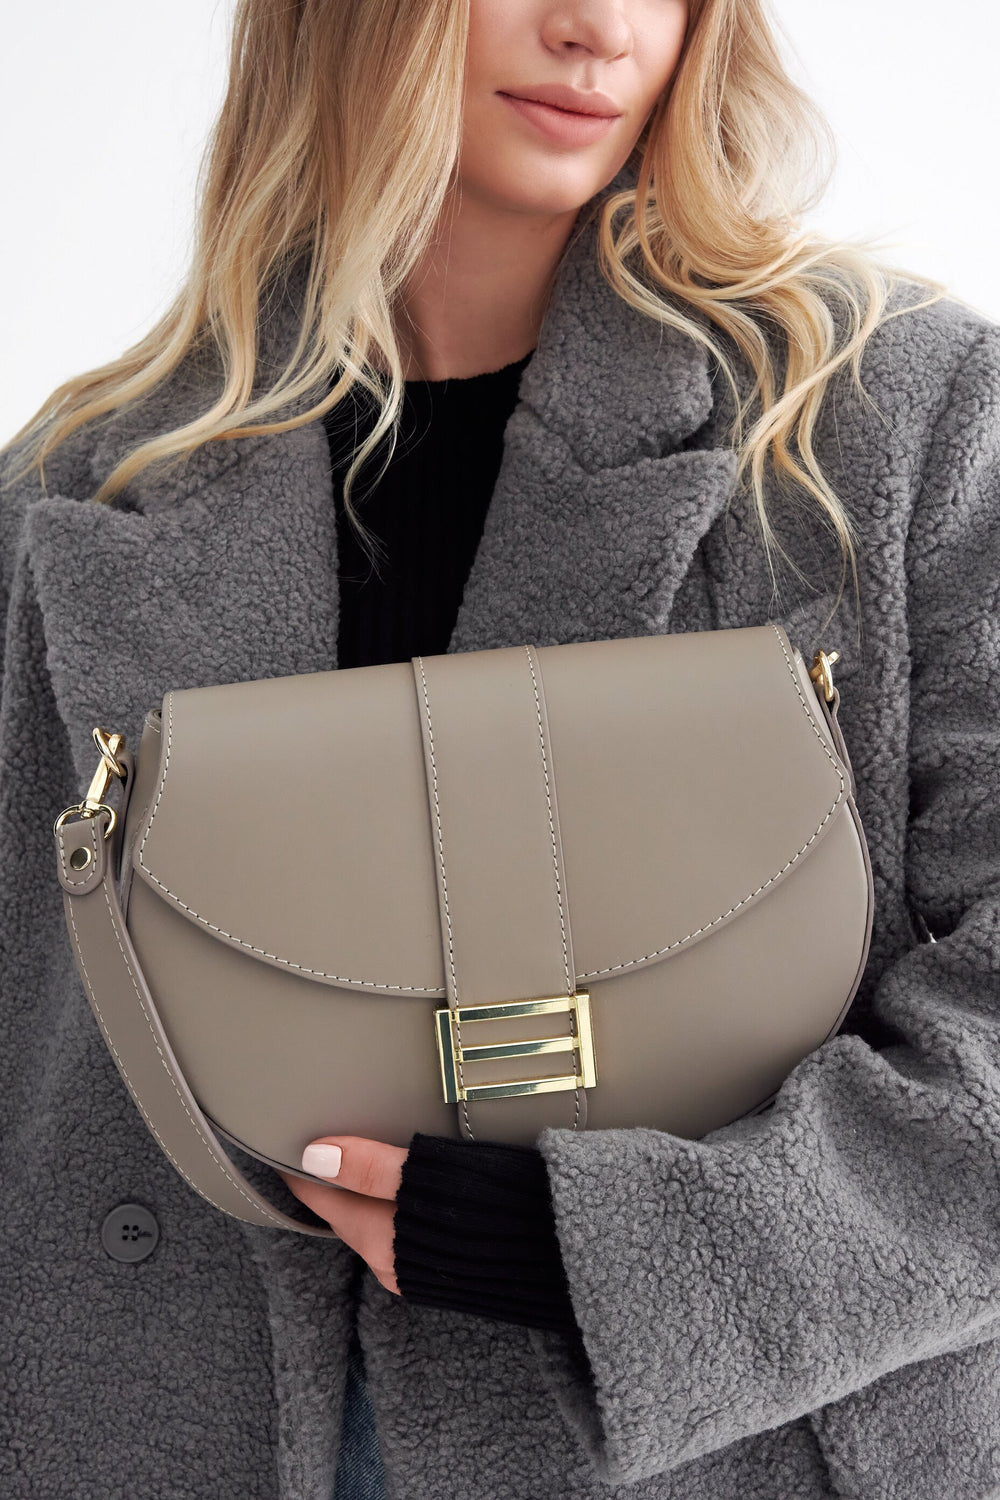 Women's Grey Leather Handbag with Gold Hardware - fully-stylized bag.